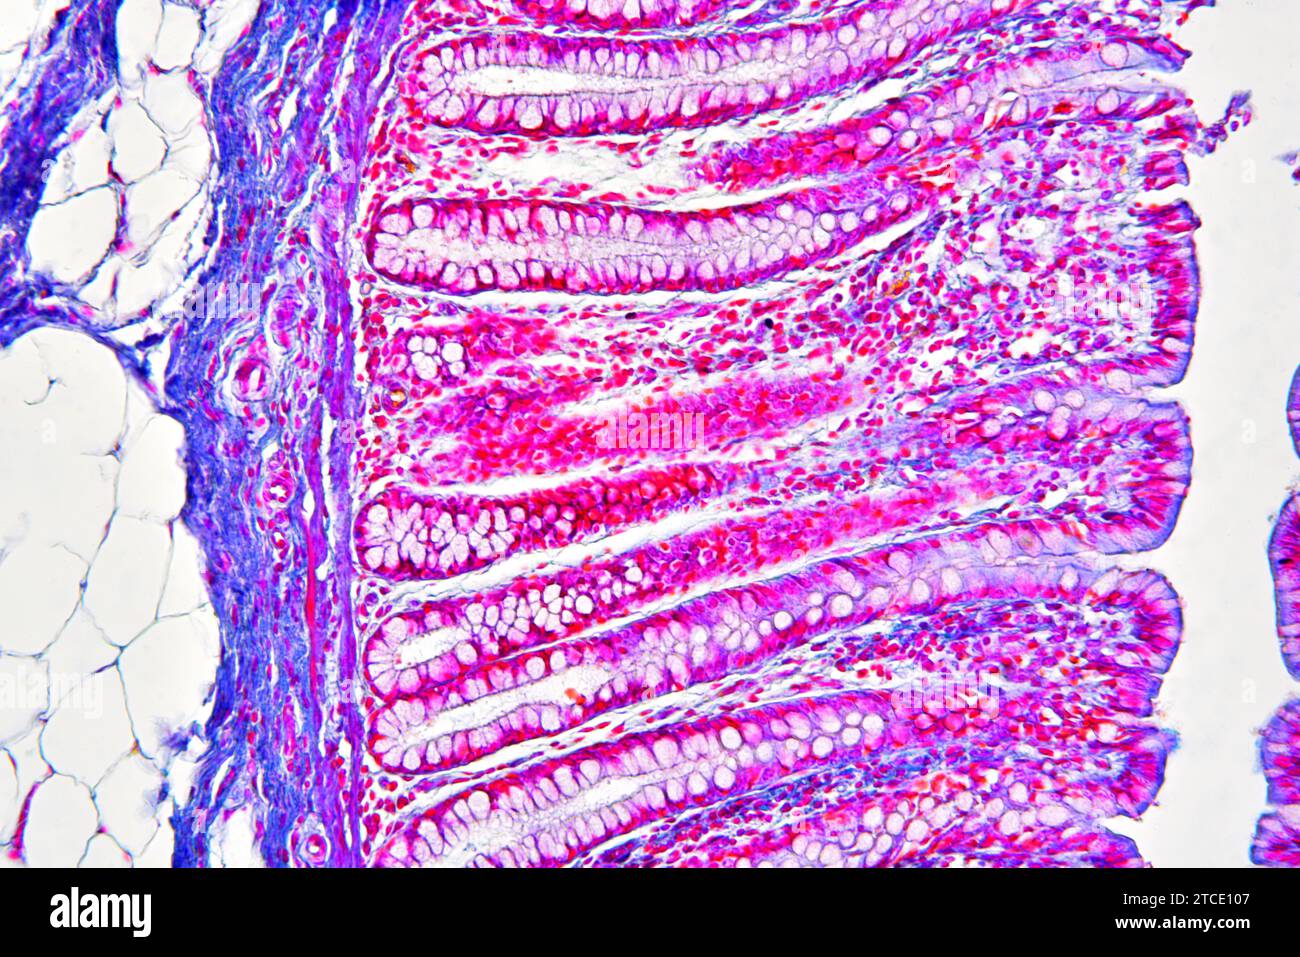 Human colon showing epithelium, mucosa, submucosa, adipose tissue, intestinal glands and villi. Optical microscope X100. Stock Photo